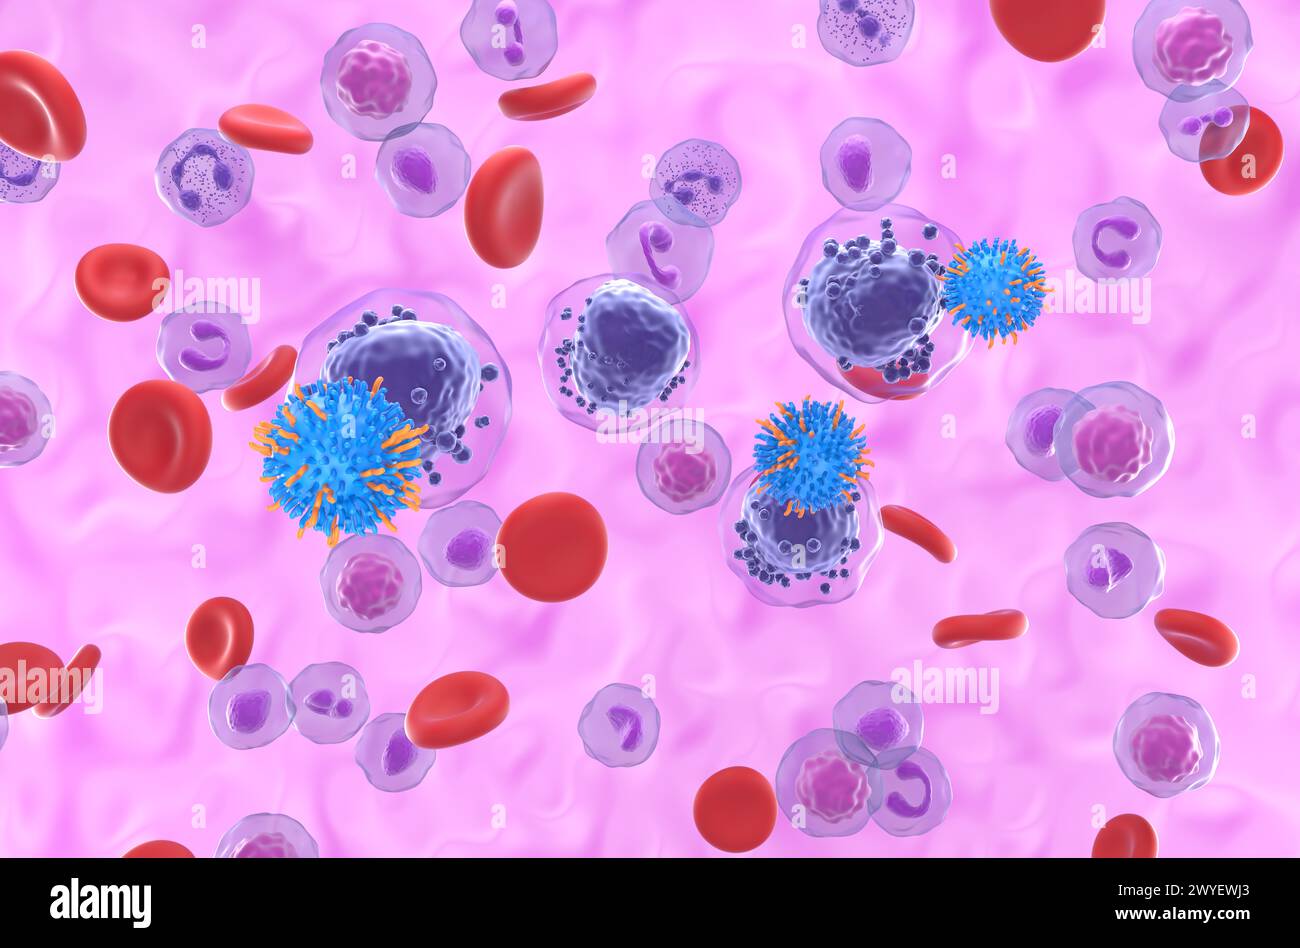 CAR-T-Zell-Therapie bei akuter myeloischer Leukämie (AML) - isometrische Darstellung 3D-Illustration Stockfoto